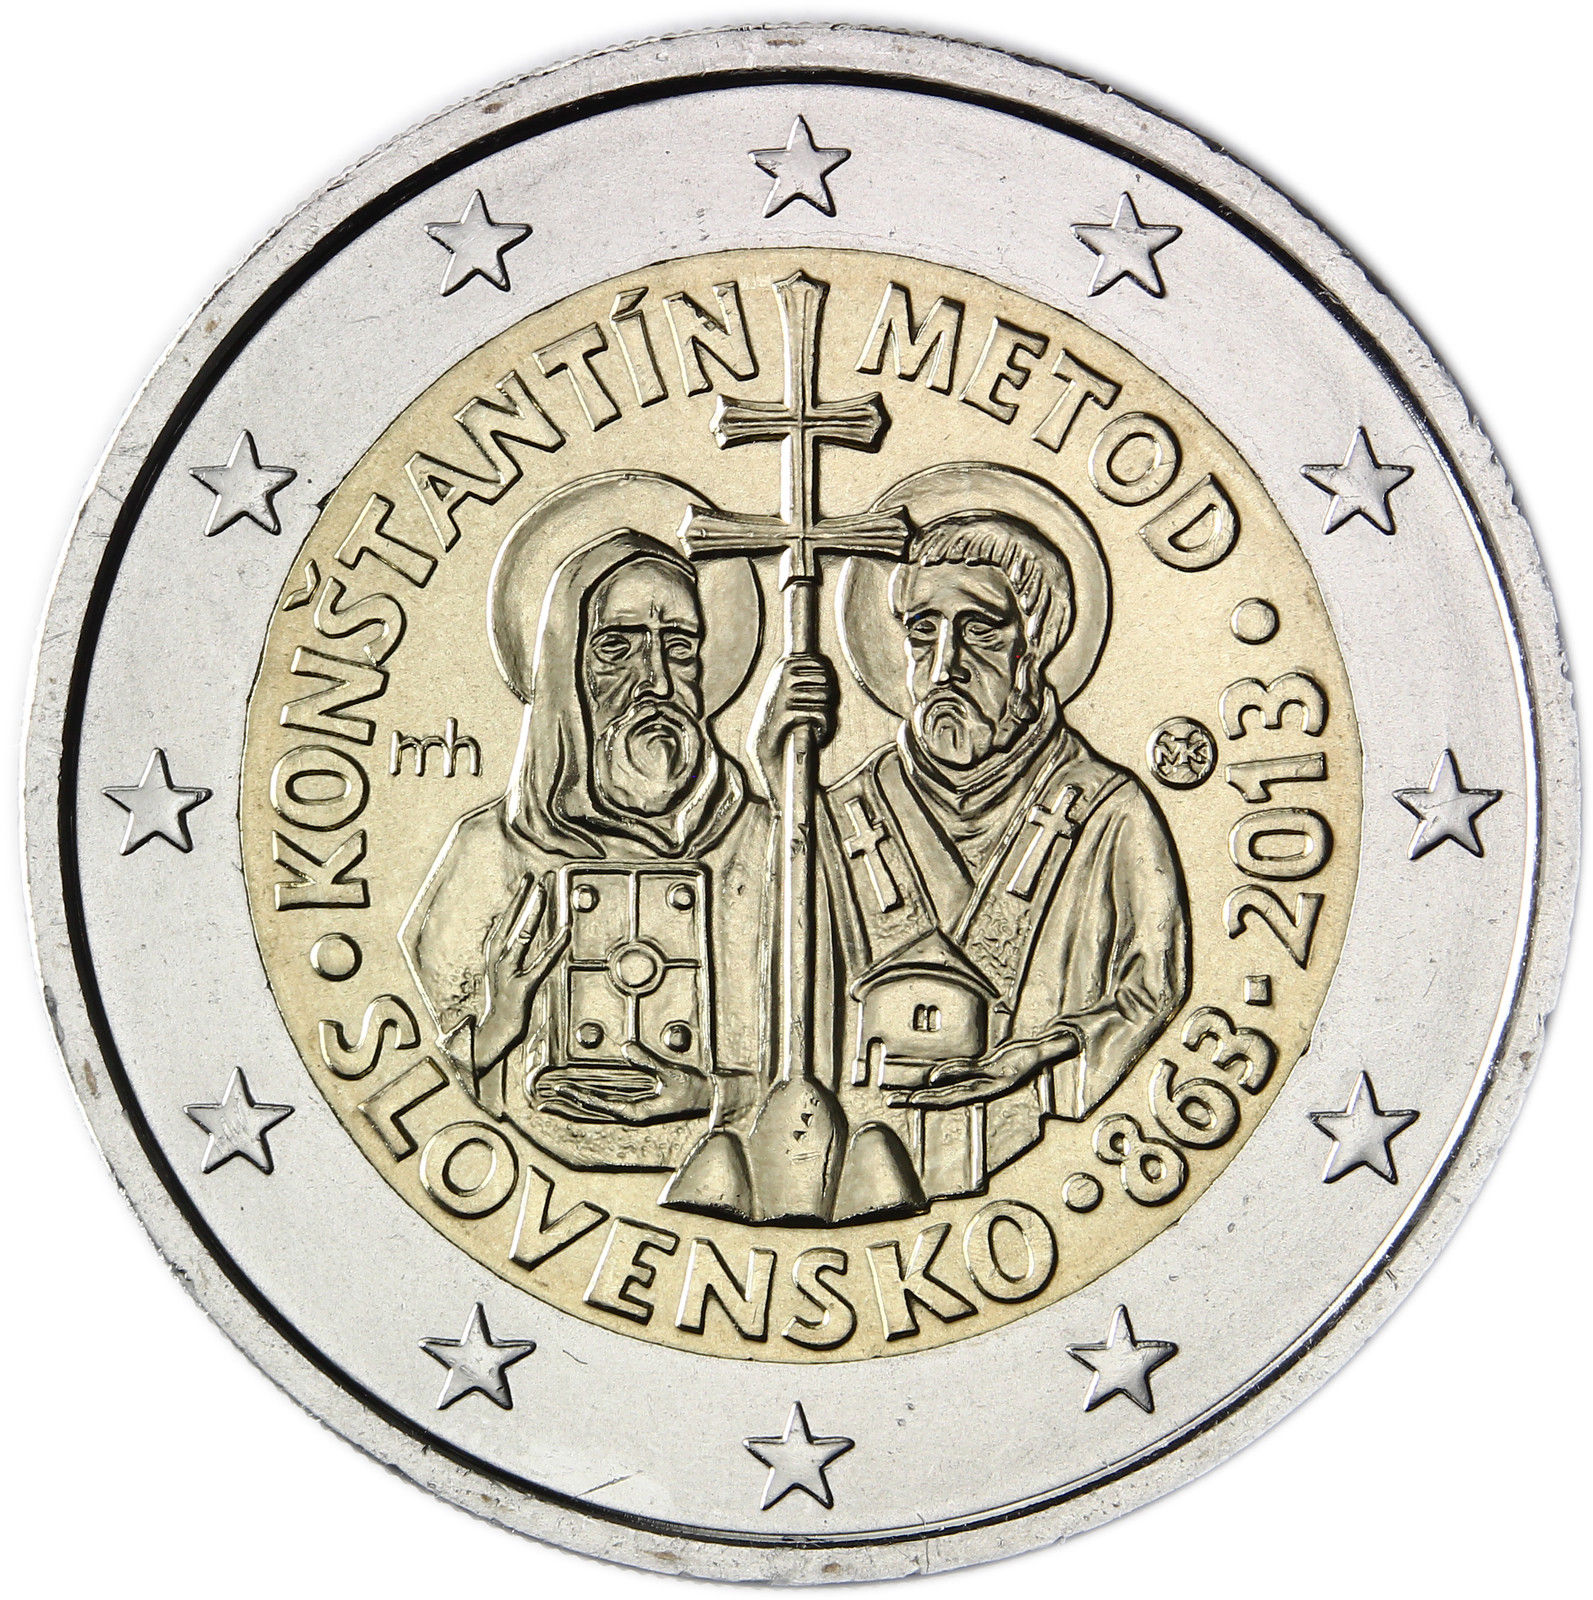 Памятные монеты евро. Монета 2 евро Slovensko. 2 Евро Словакия. Монеты евро 2 евро Словакия. 2 Евро 2013.